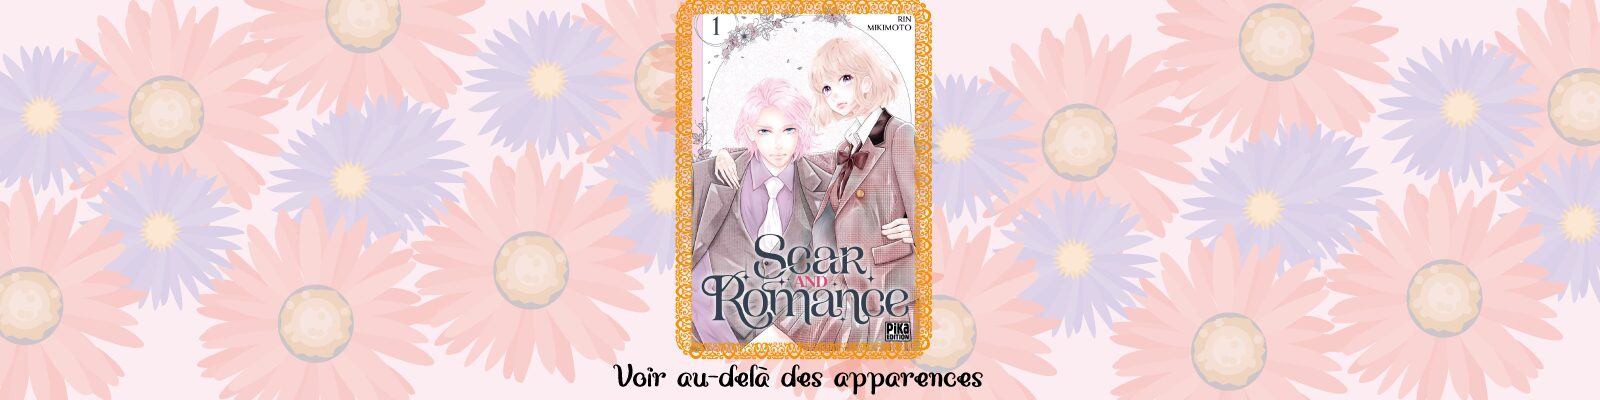 Scar and Romance